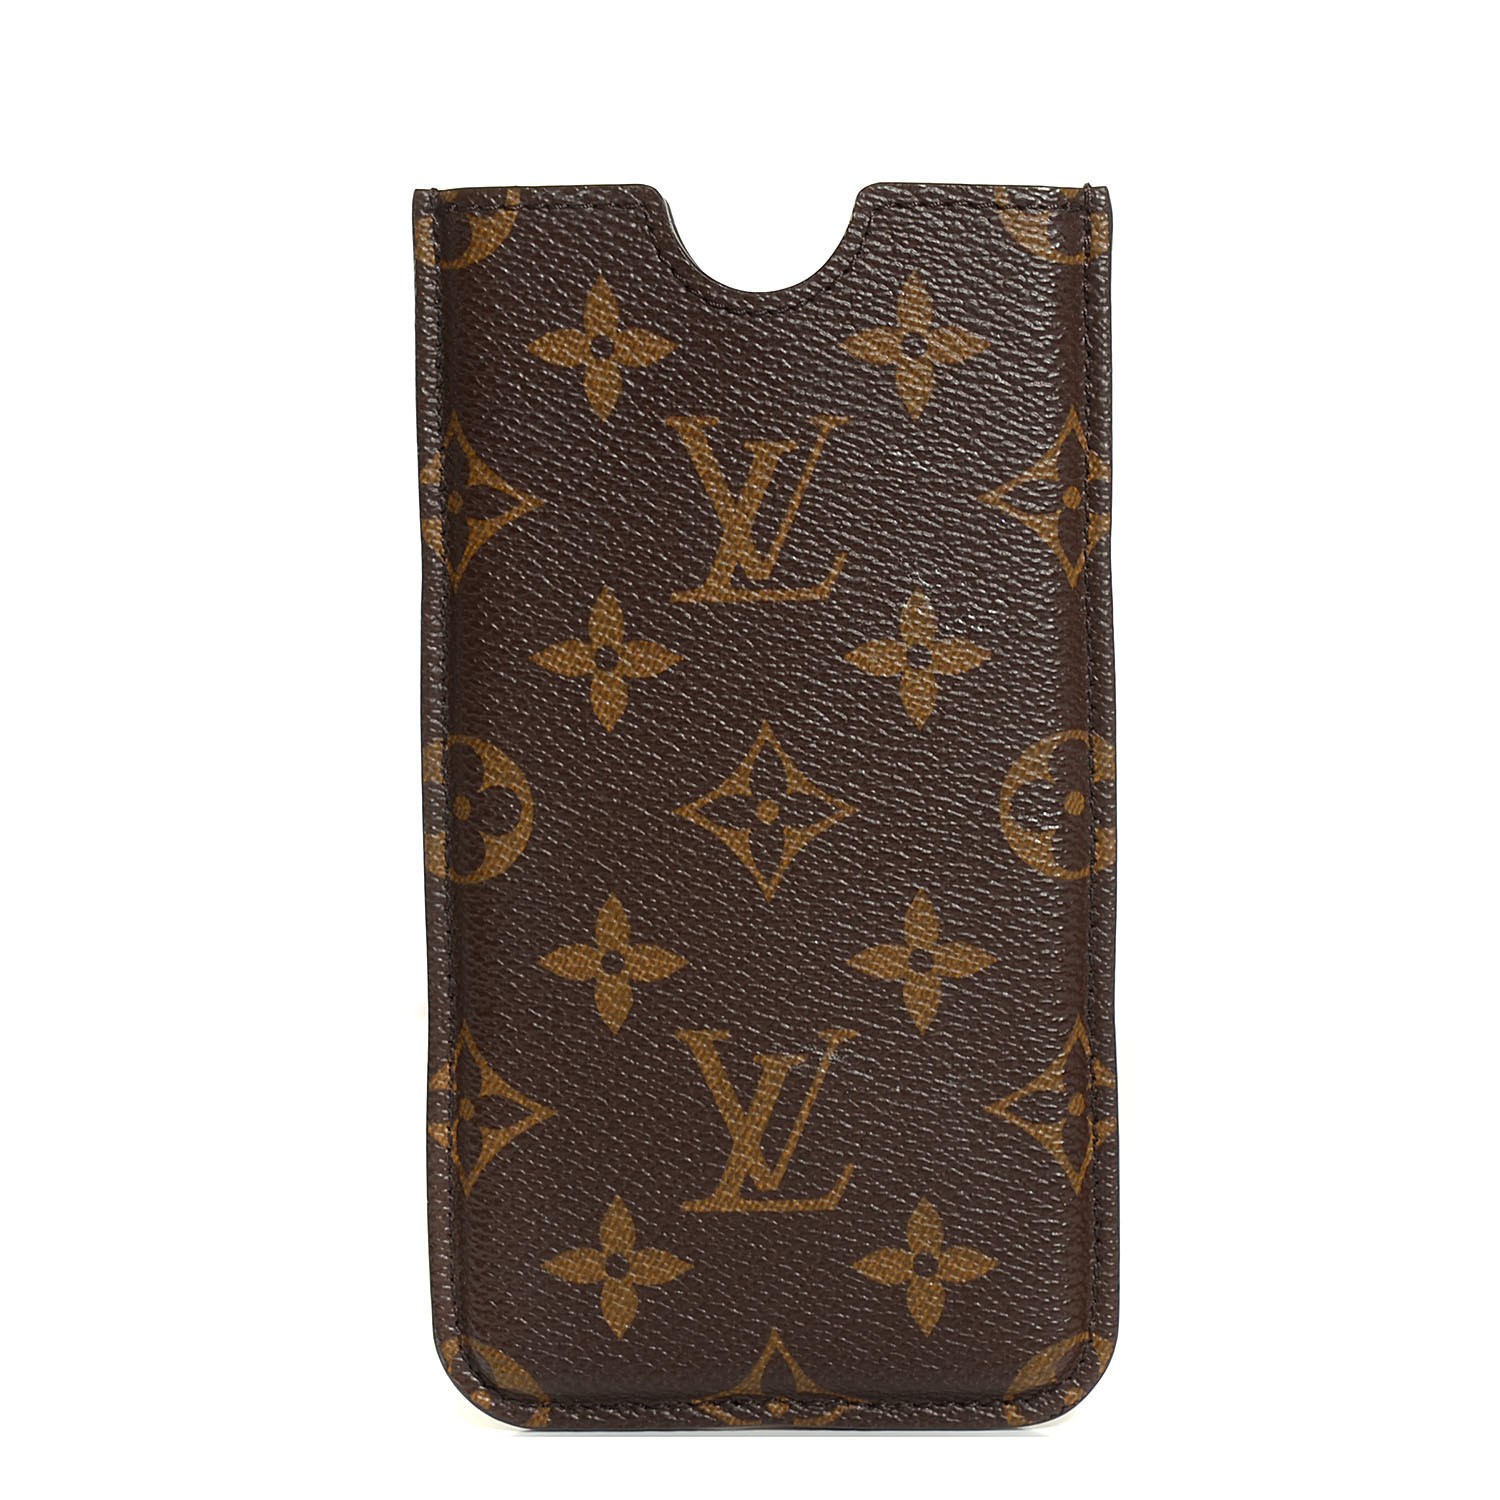 LOUIS VUITTON LV Case For iPhone MADE IN FRANCE. Original Louis Vuitton